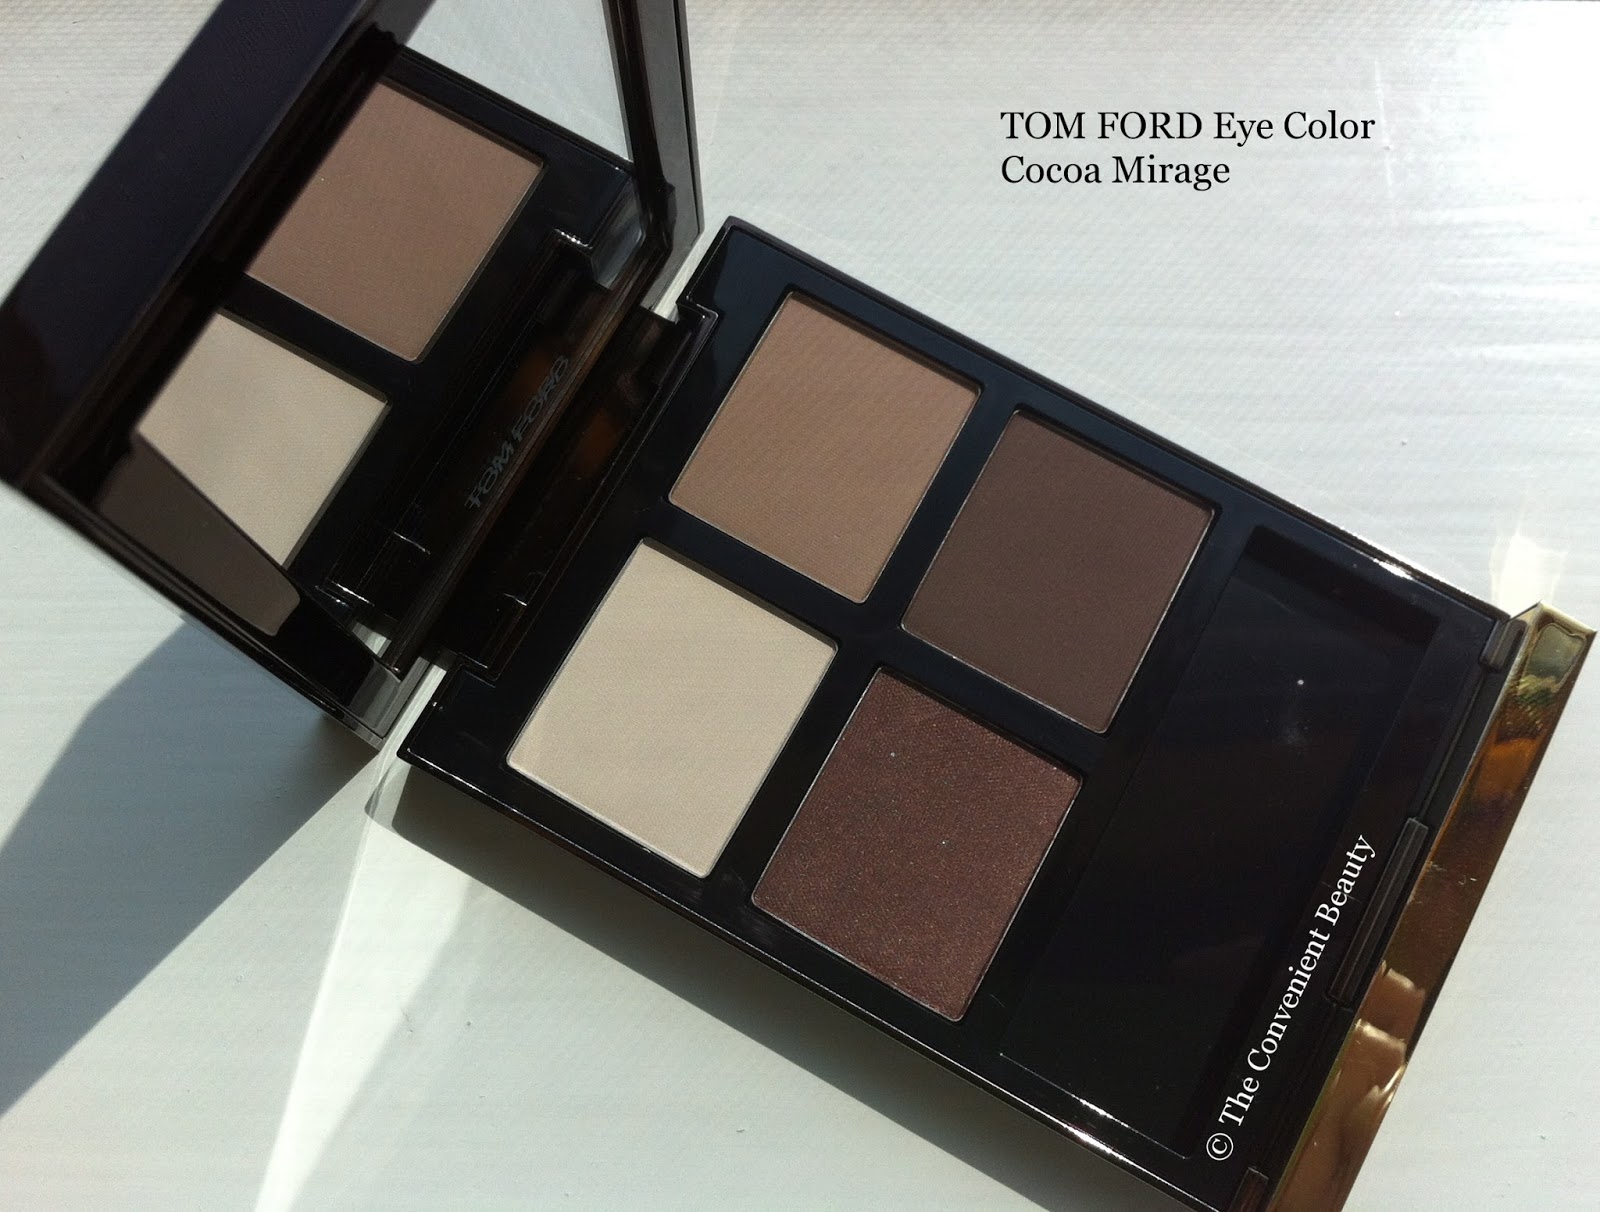 tidsskrift radius Renovering The Convenient Beauty: Review: Tom Ford Eye Color Quad No 3 Cocoa Mirage